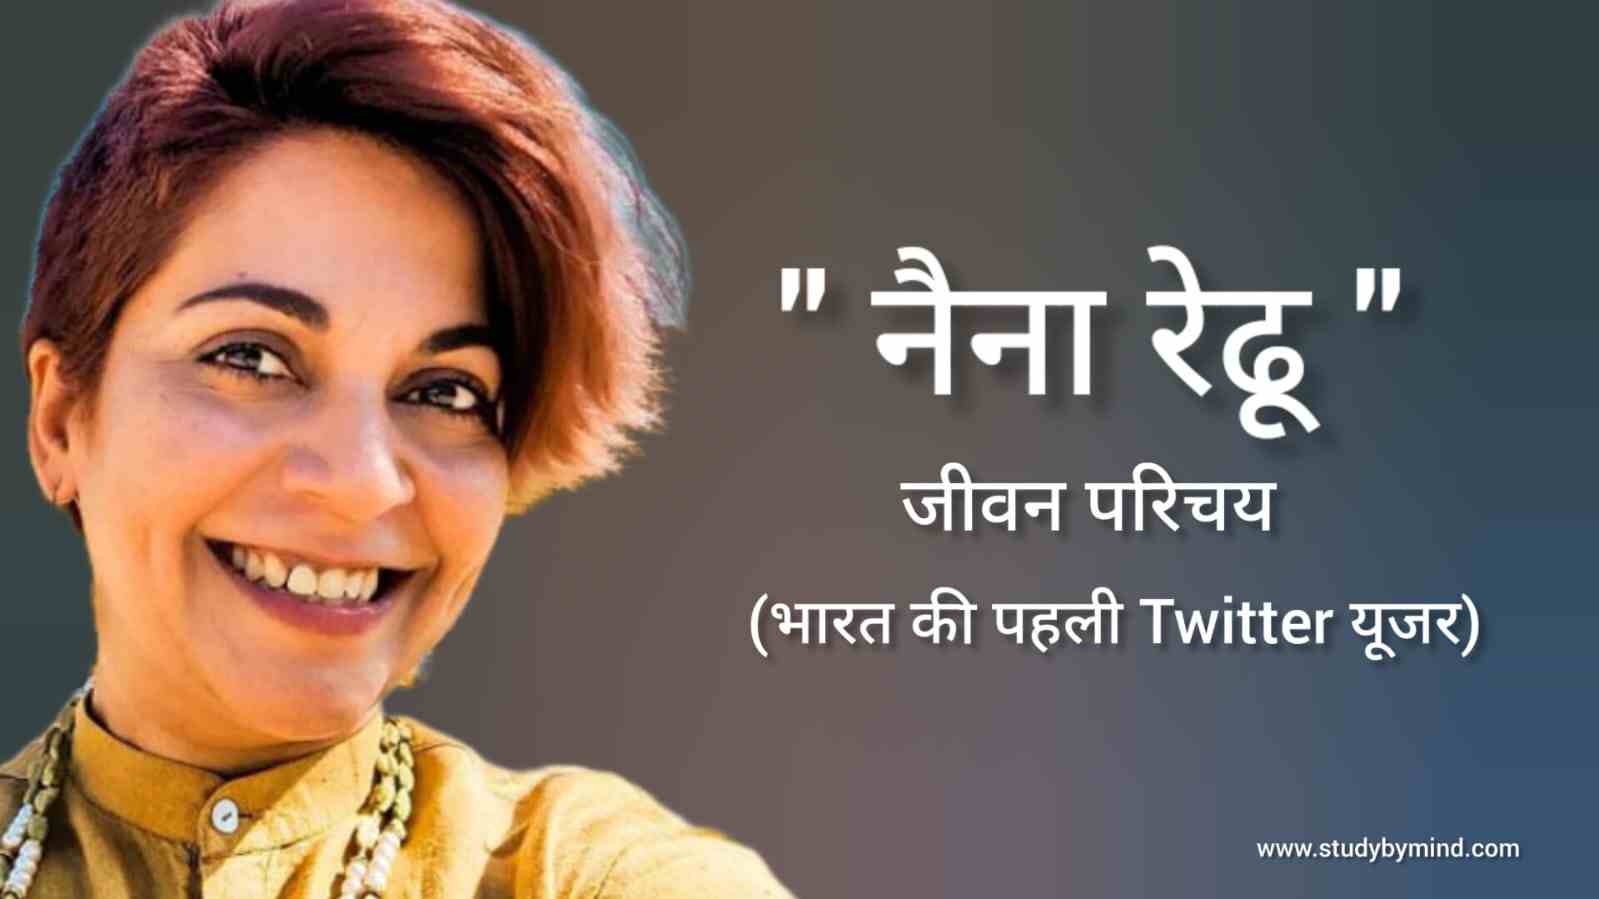 You are currently viewing नैना रेढू जीवन परिचय Naina Redhu biography in hindi (भारत की पहली Twitter यूजर)